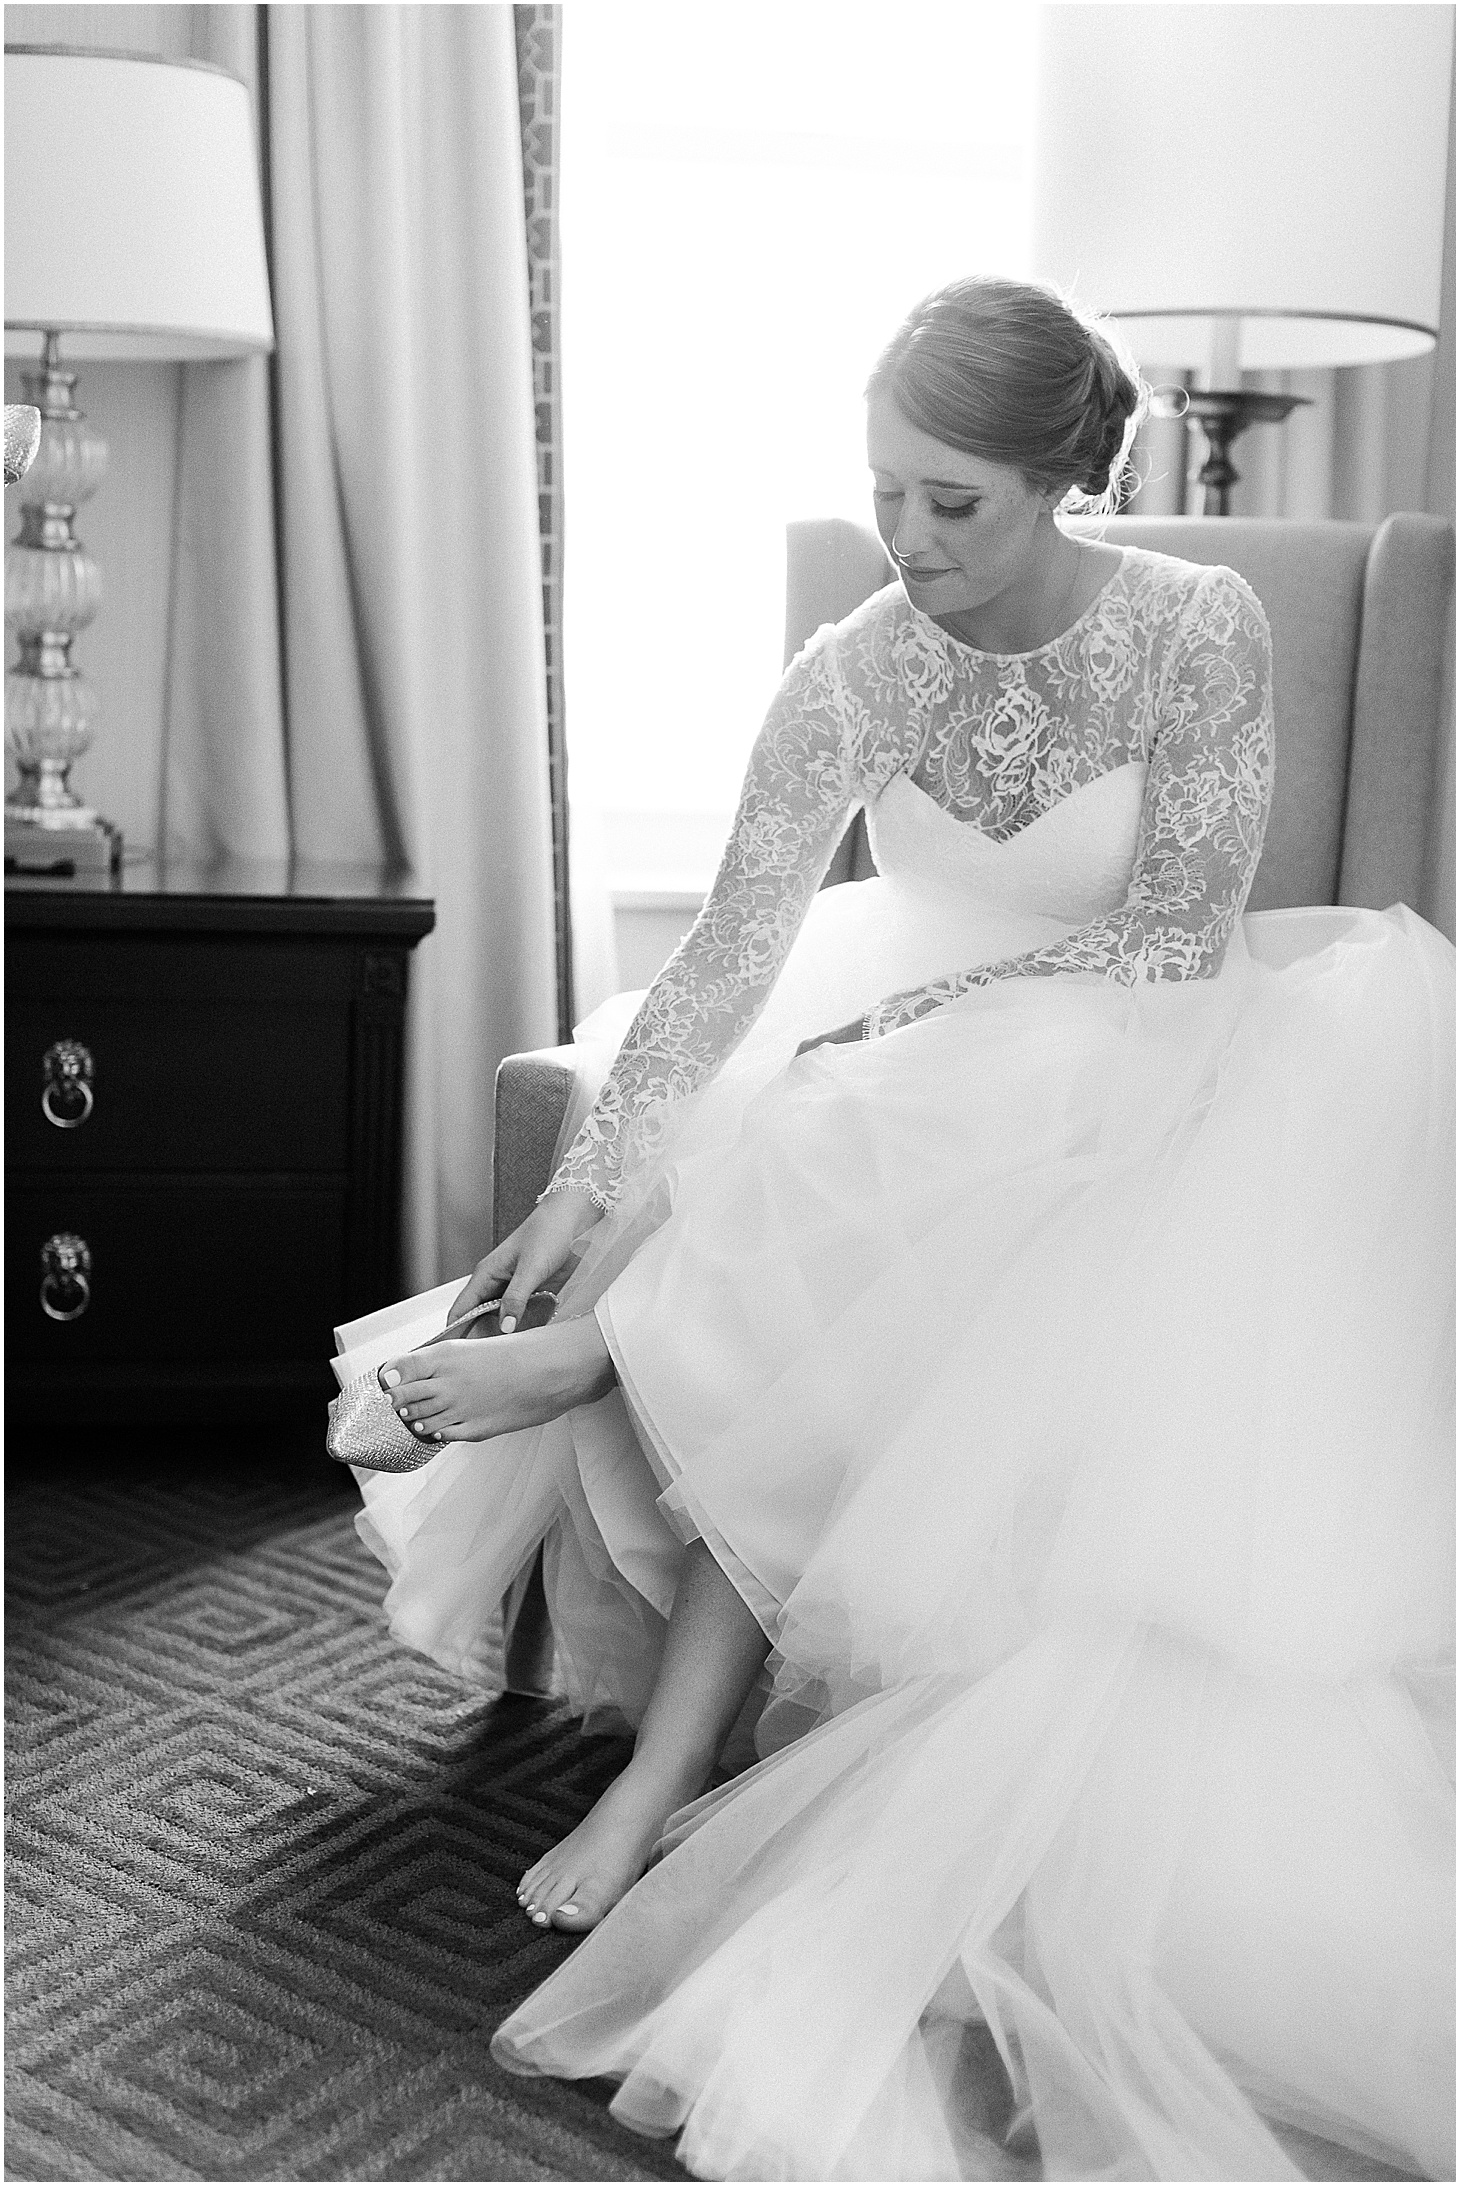 Bride Getting Ready at Willard InterContinental Hotel, Sarah Bradshaw Photography, Reception at Andrew W. Mellon Auditorium